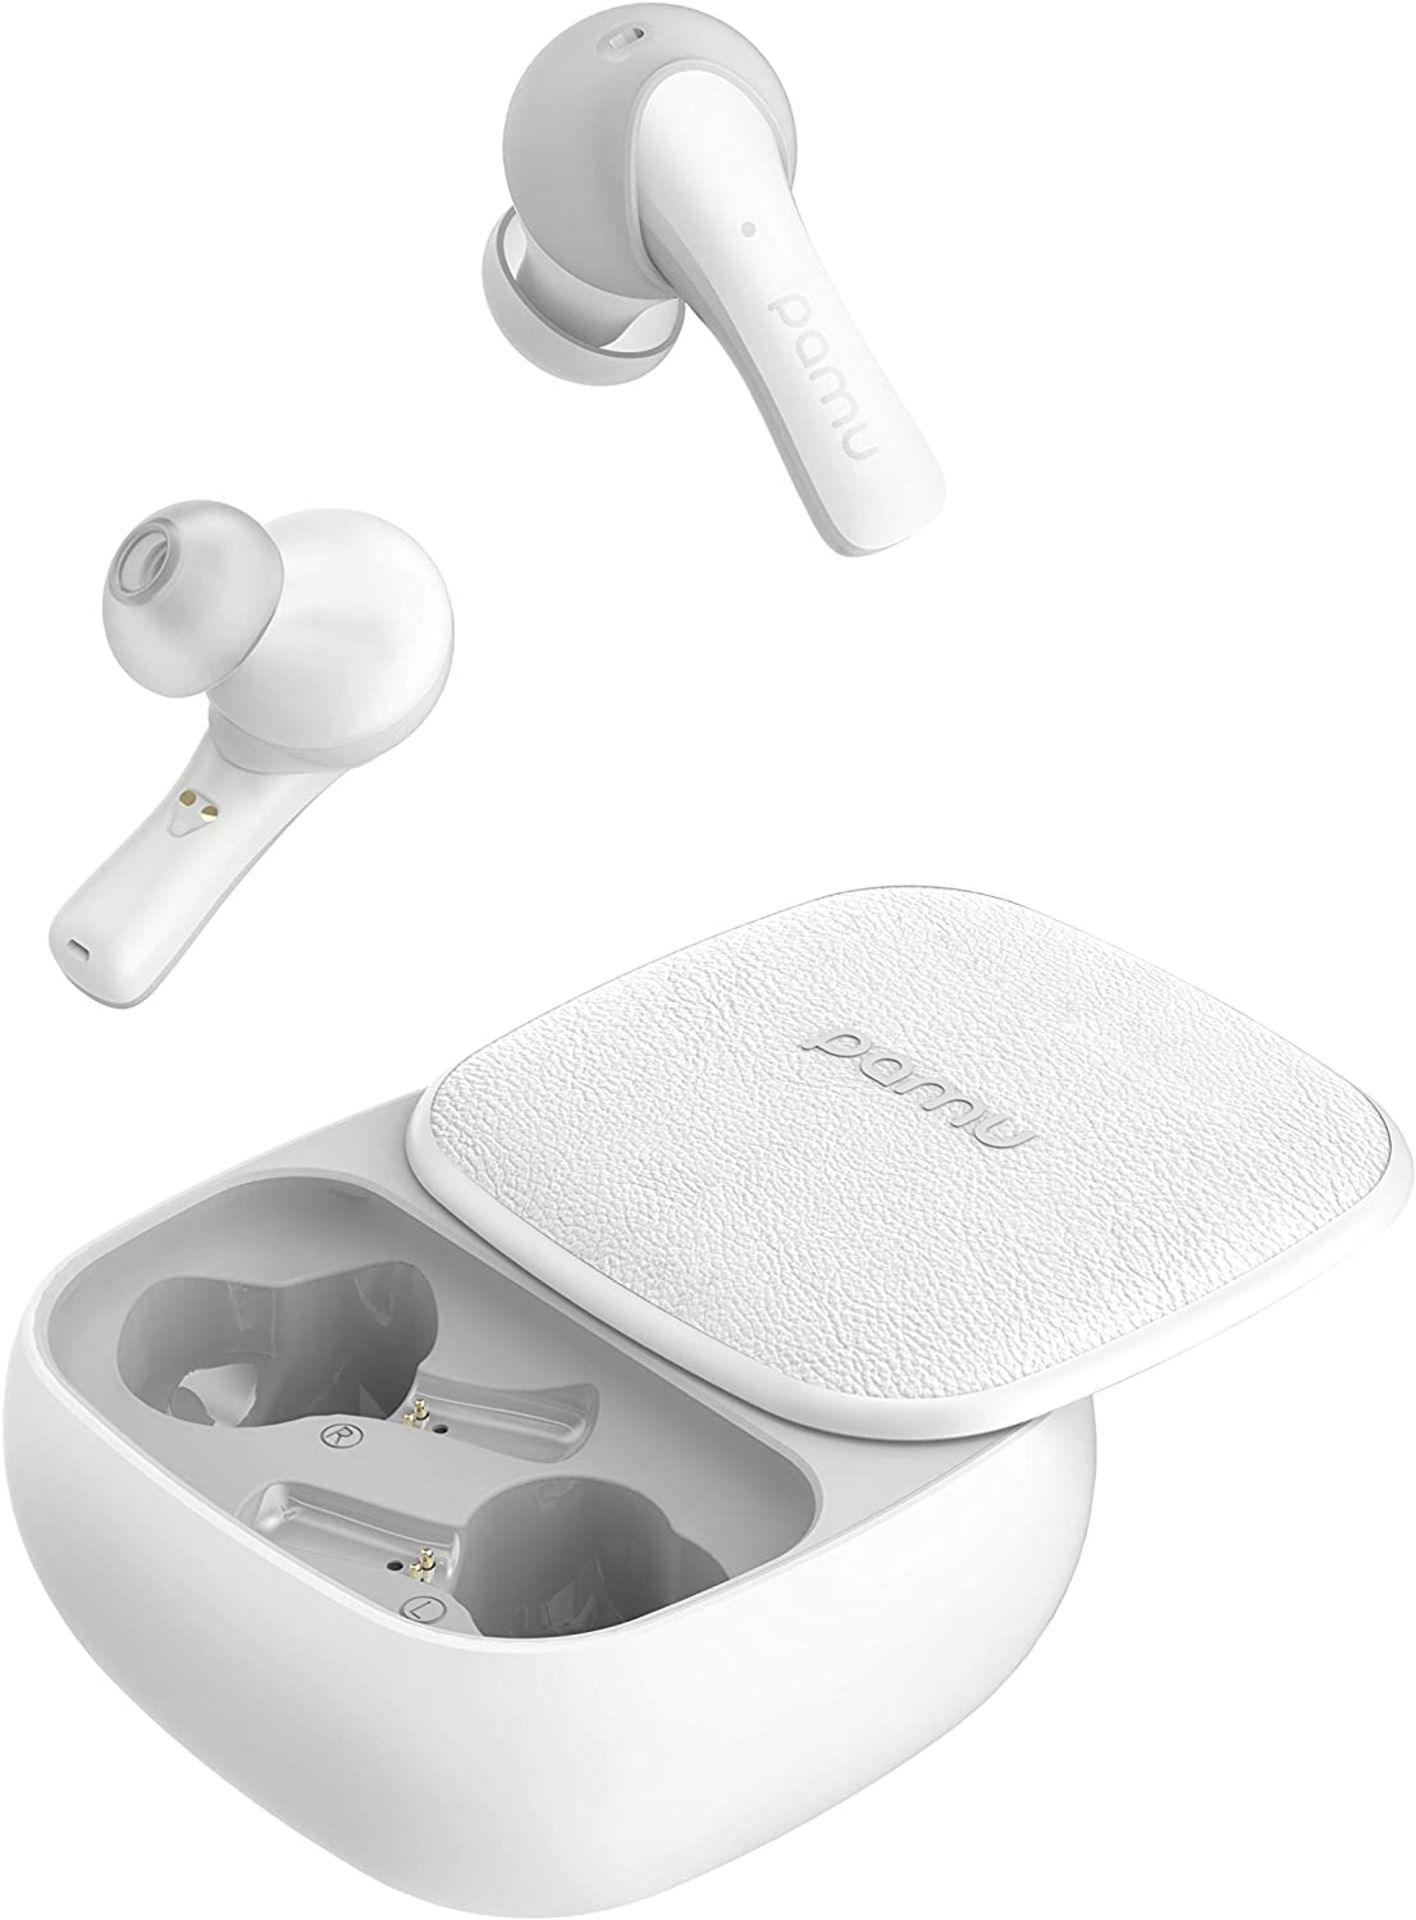 Padmate Pamu Slide True Wireless Stereo Bluetooth Earphones - White RRP £79.99 - Image 3 of 3